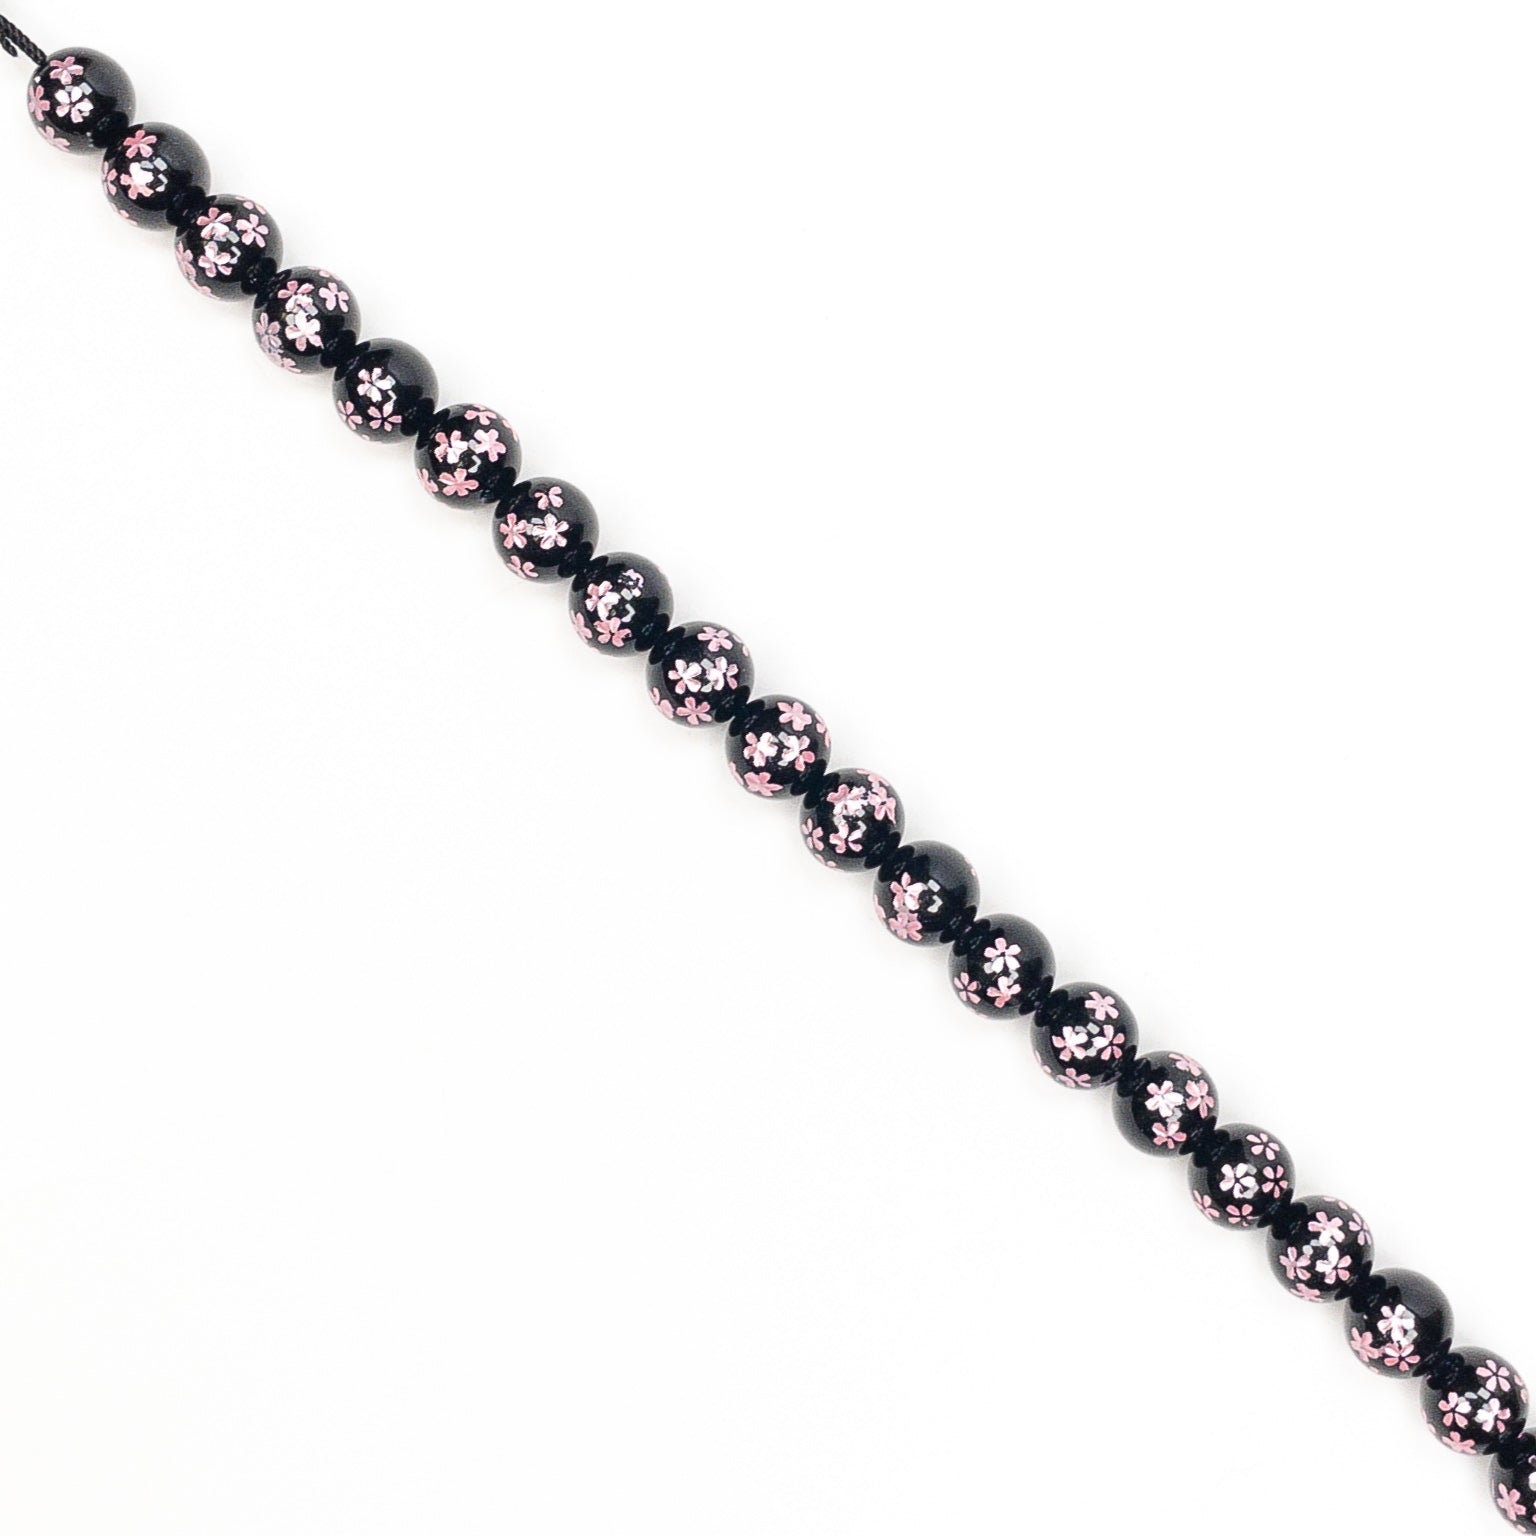 Black Agate Etched Pink Sakura Shower 10mm Round Bead - 7.5" Strand